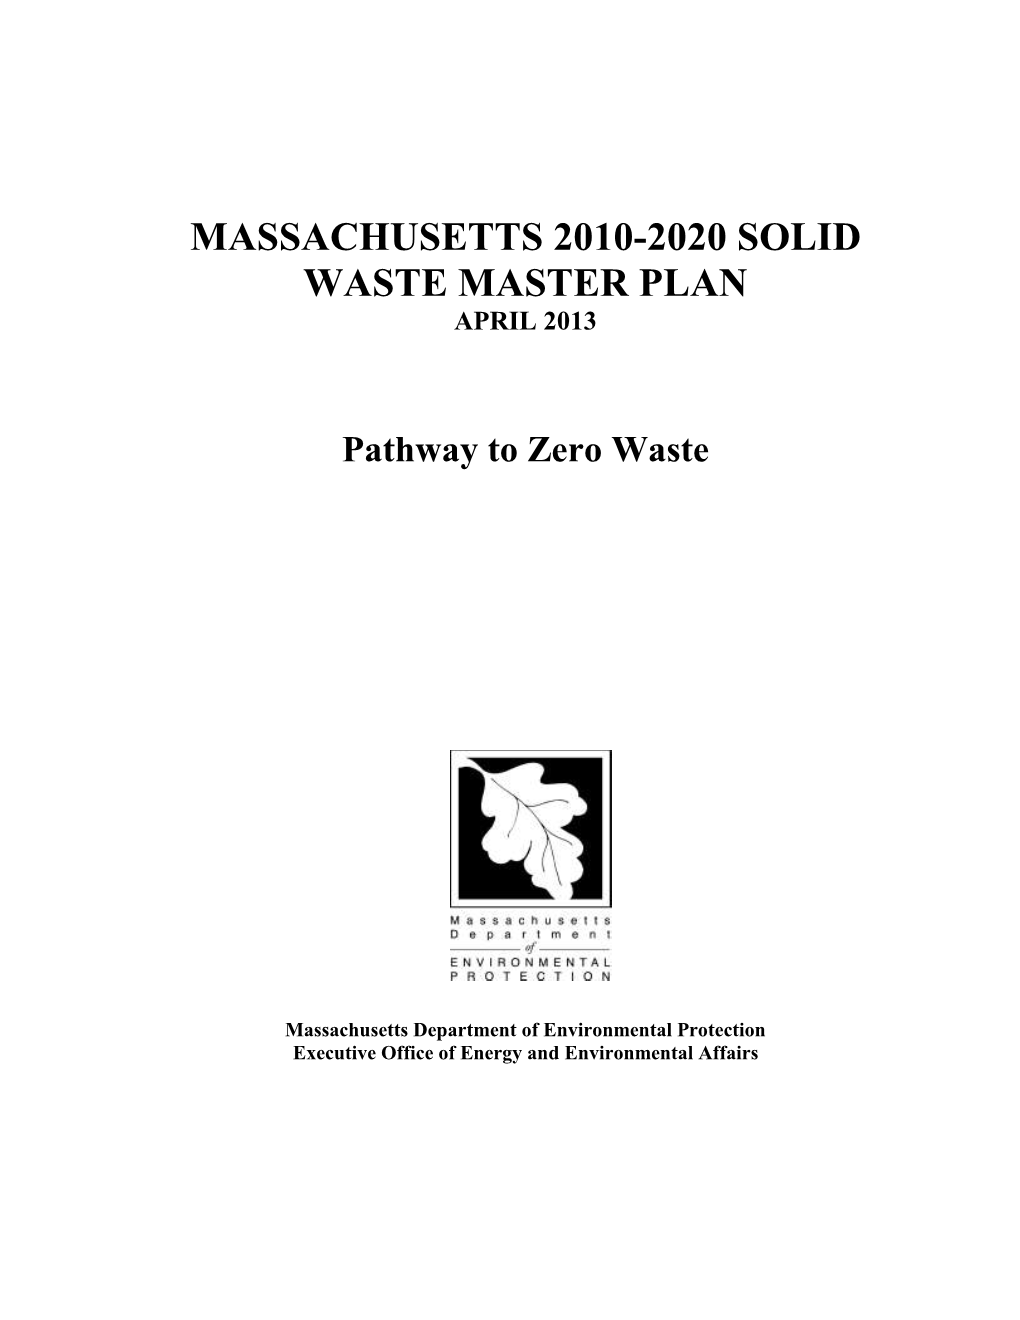 Massachusetts 2010-2020 Solid Waste Master Plan April 2013